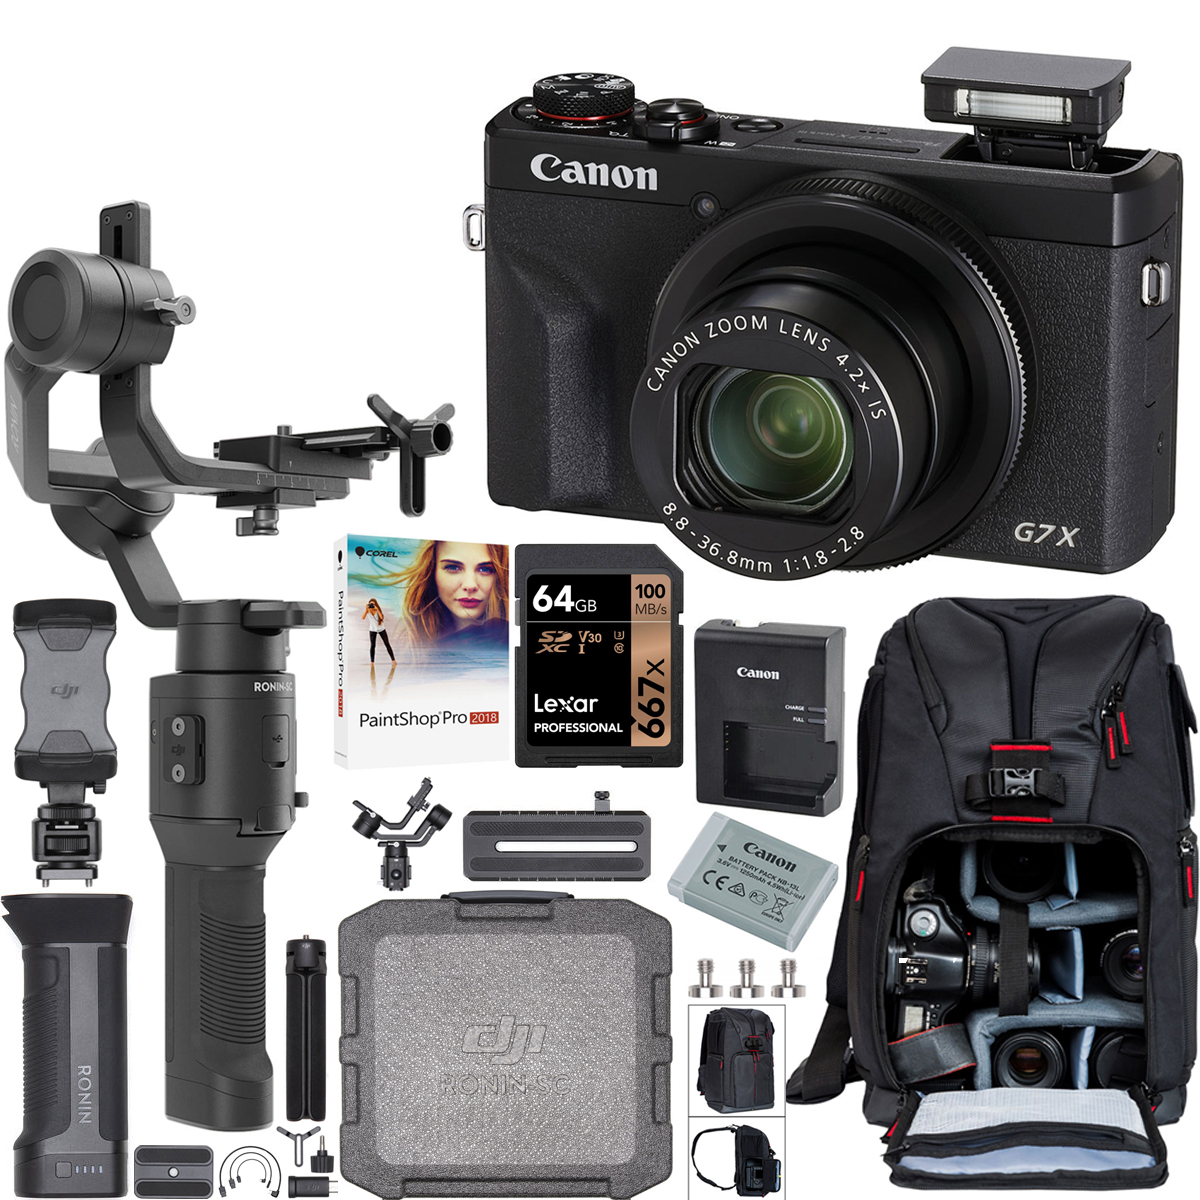 Canon PowerShot G7 X Mark III Digital Camera Black + DJI Ronin-SC Gimbal Kit | eBay